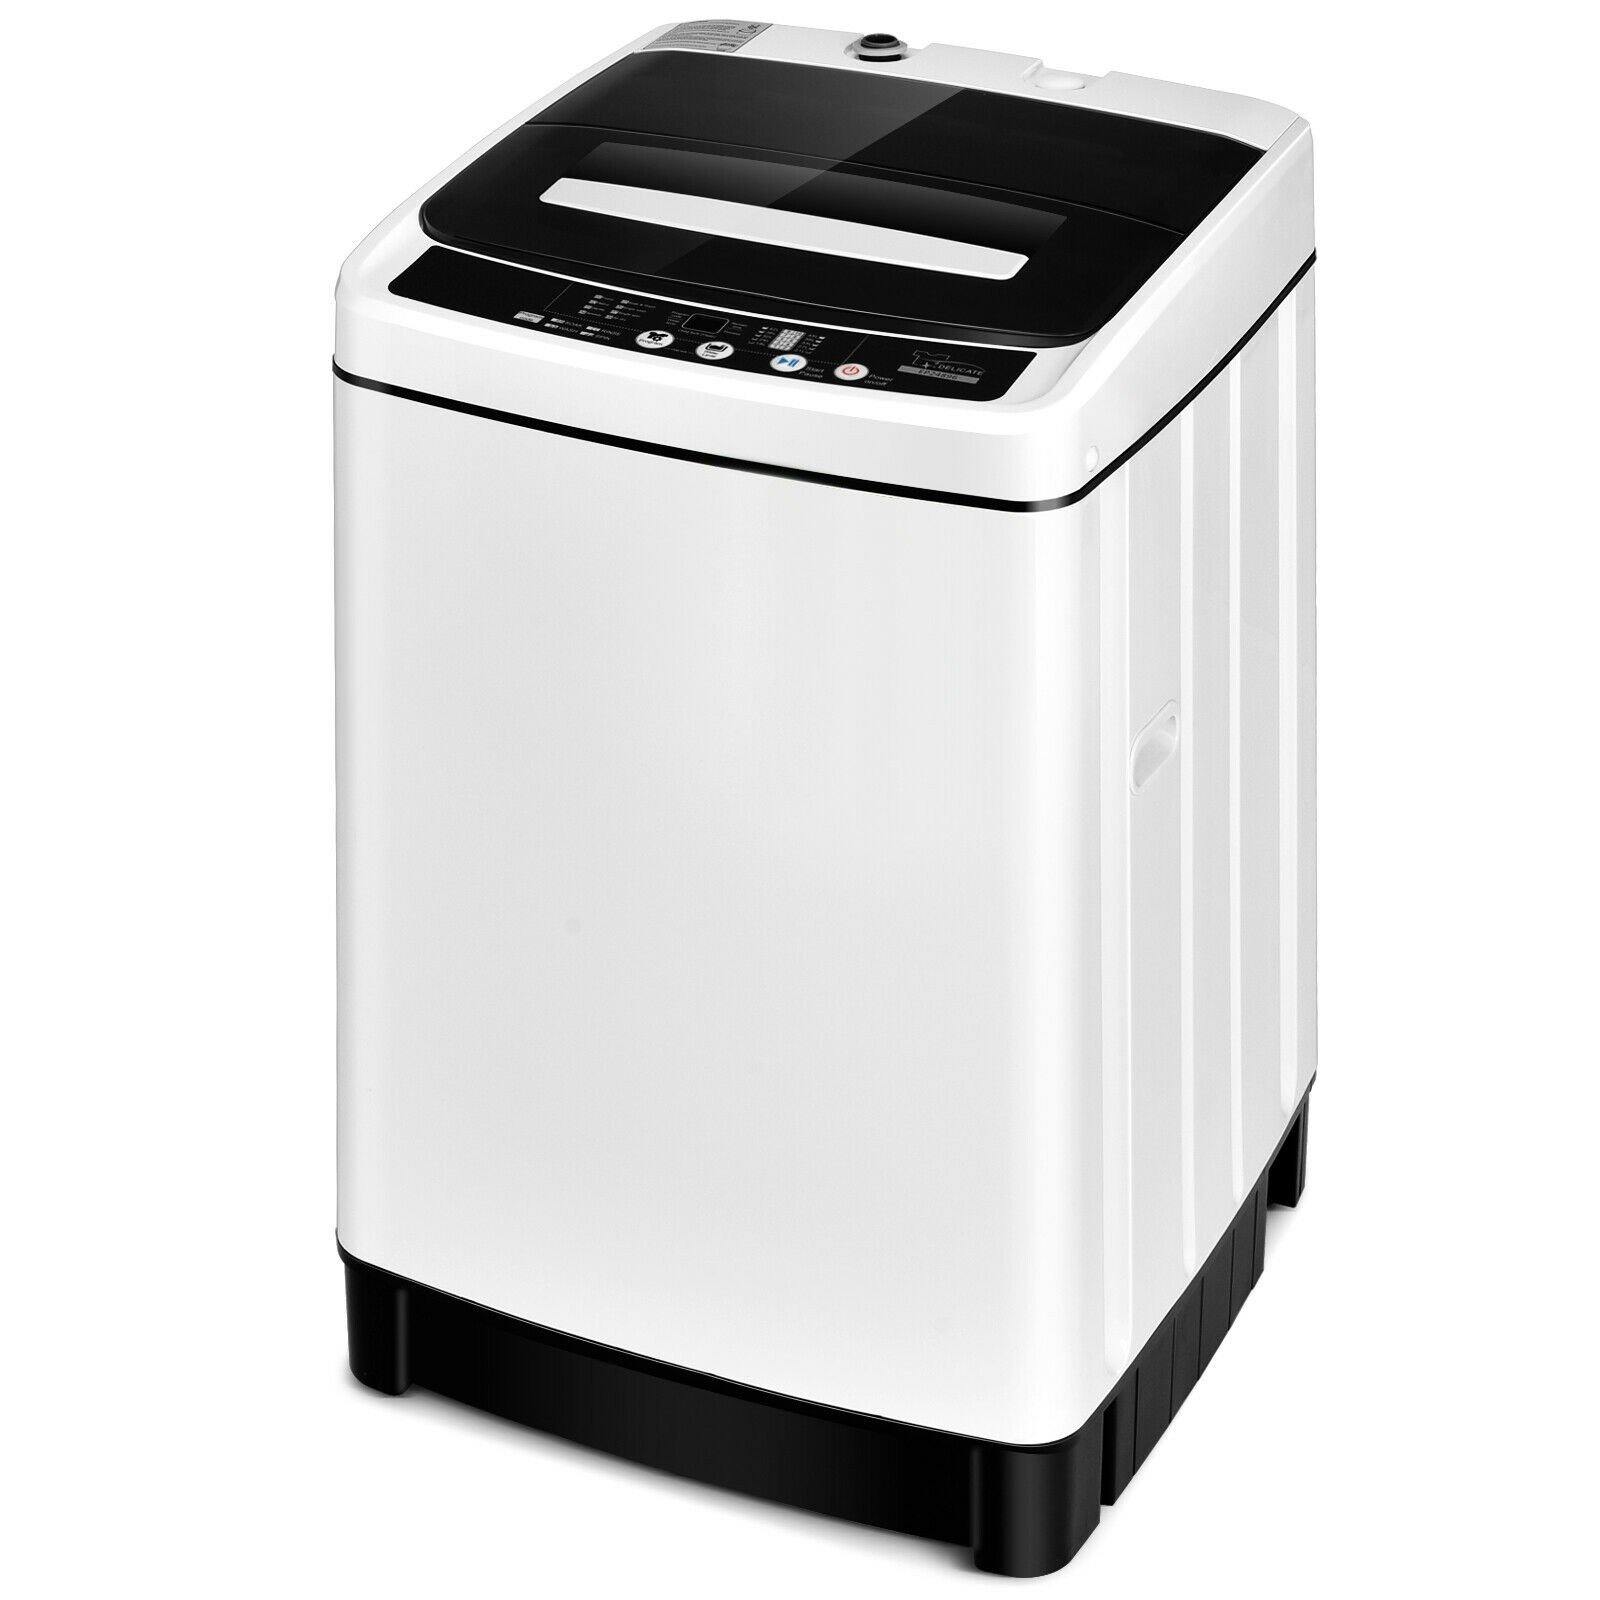  Giantex GT-US61100-FPGR Portable Washers, White & Gray :  Appliances